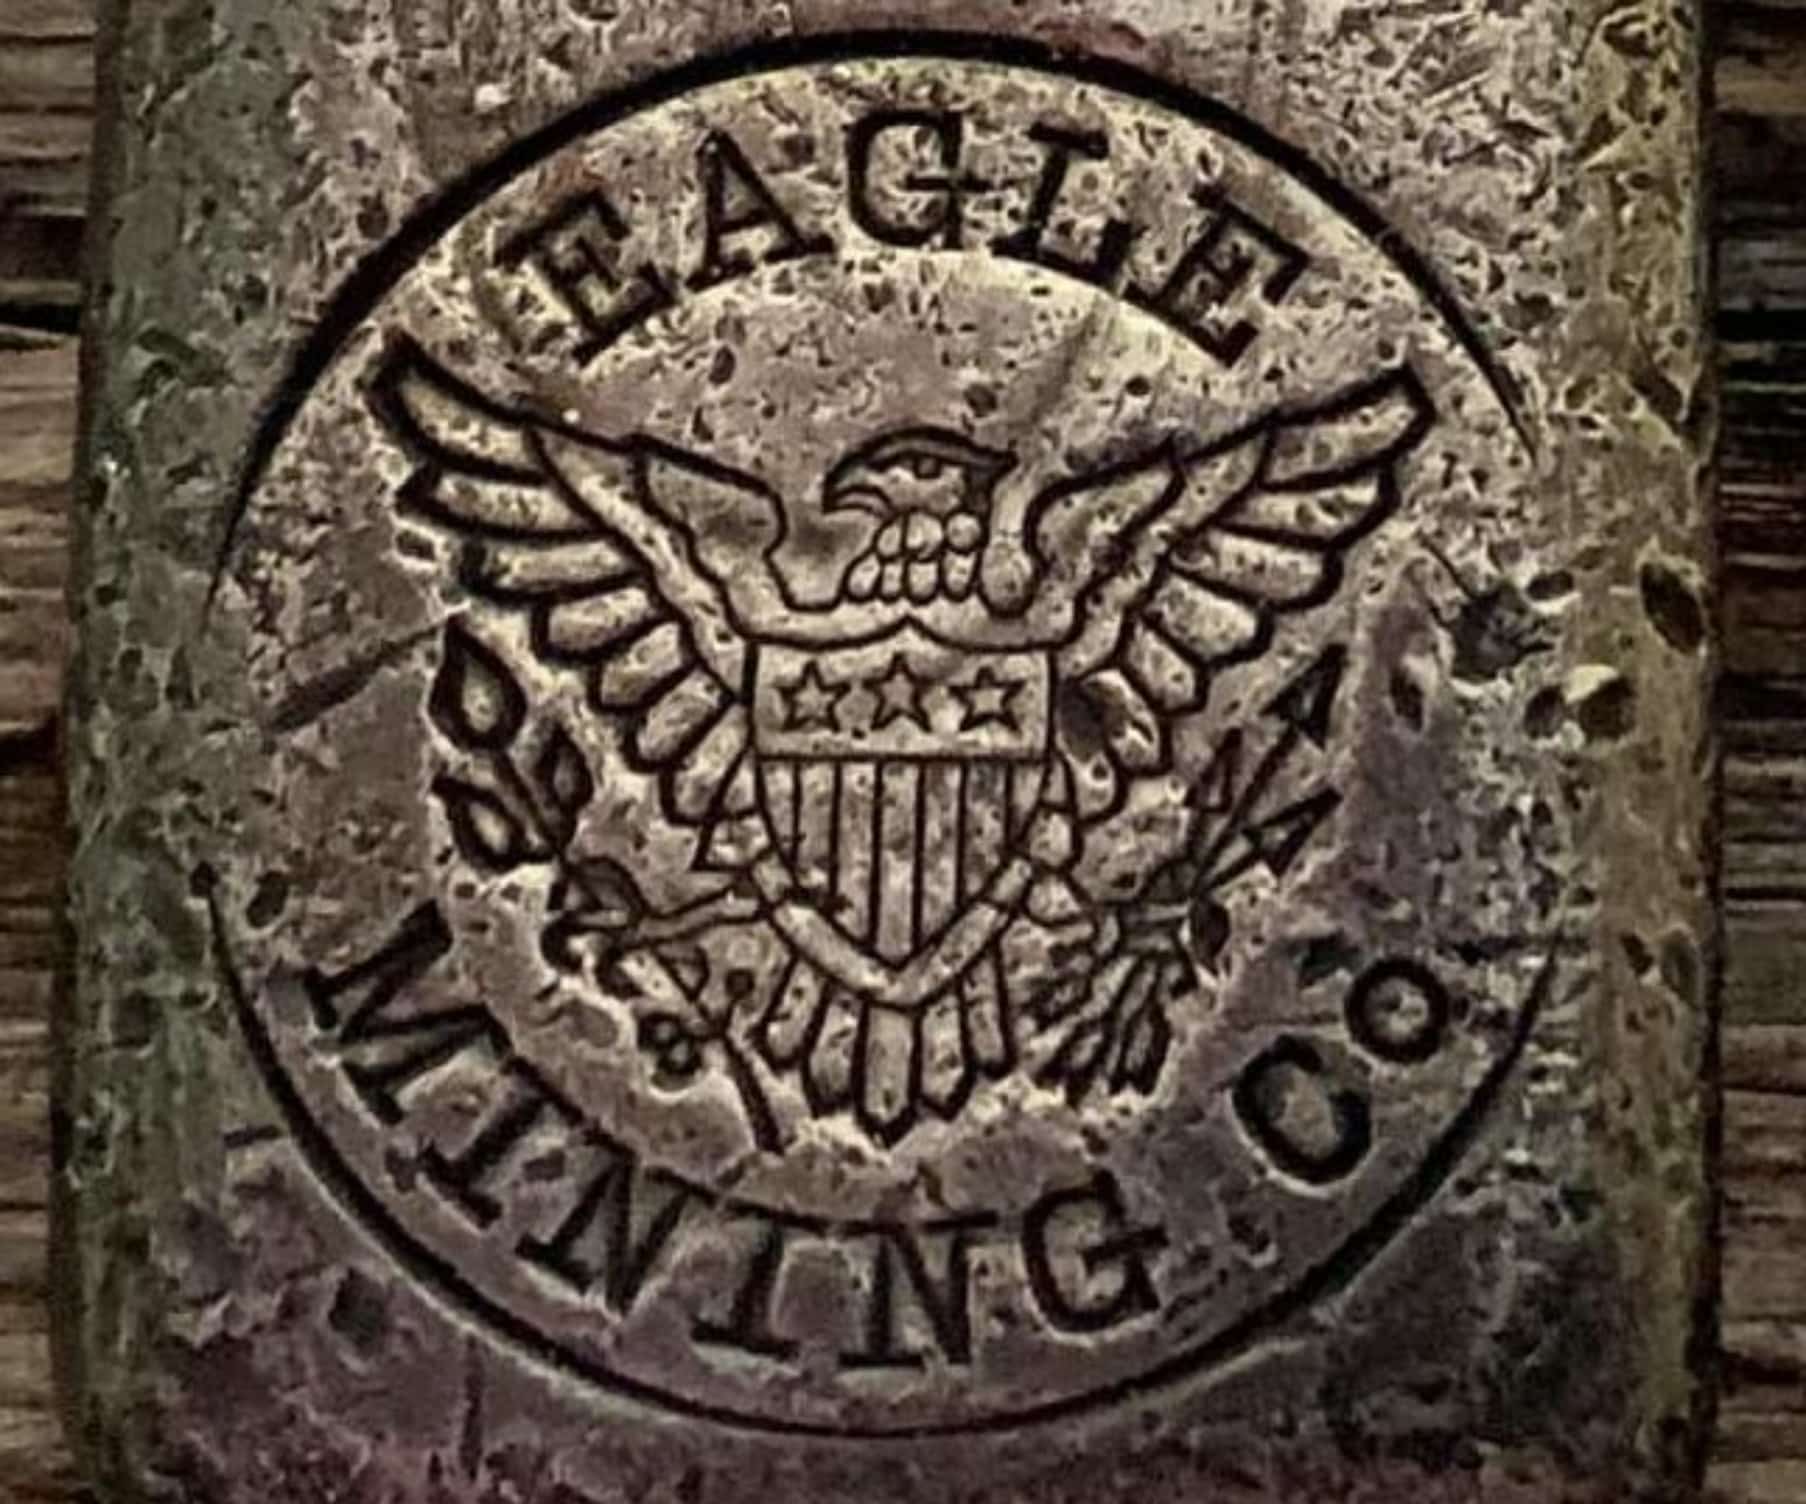 Eagle Mining Co vintage silver hallmark